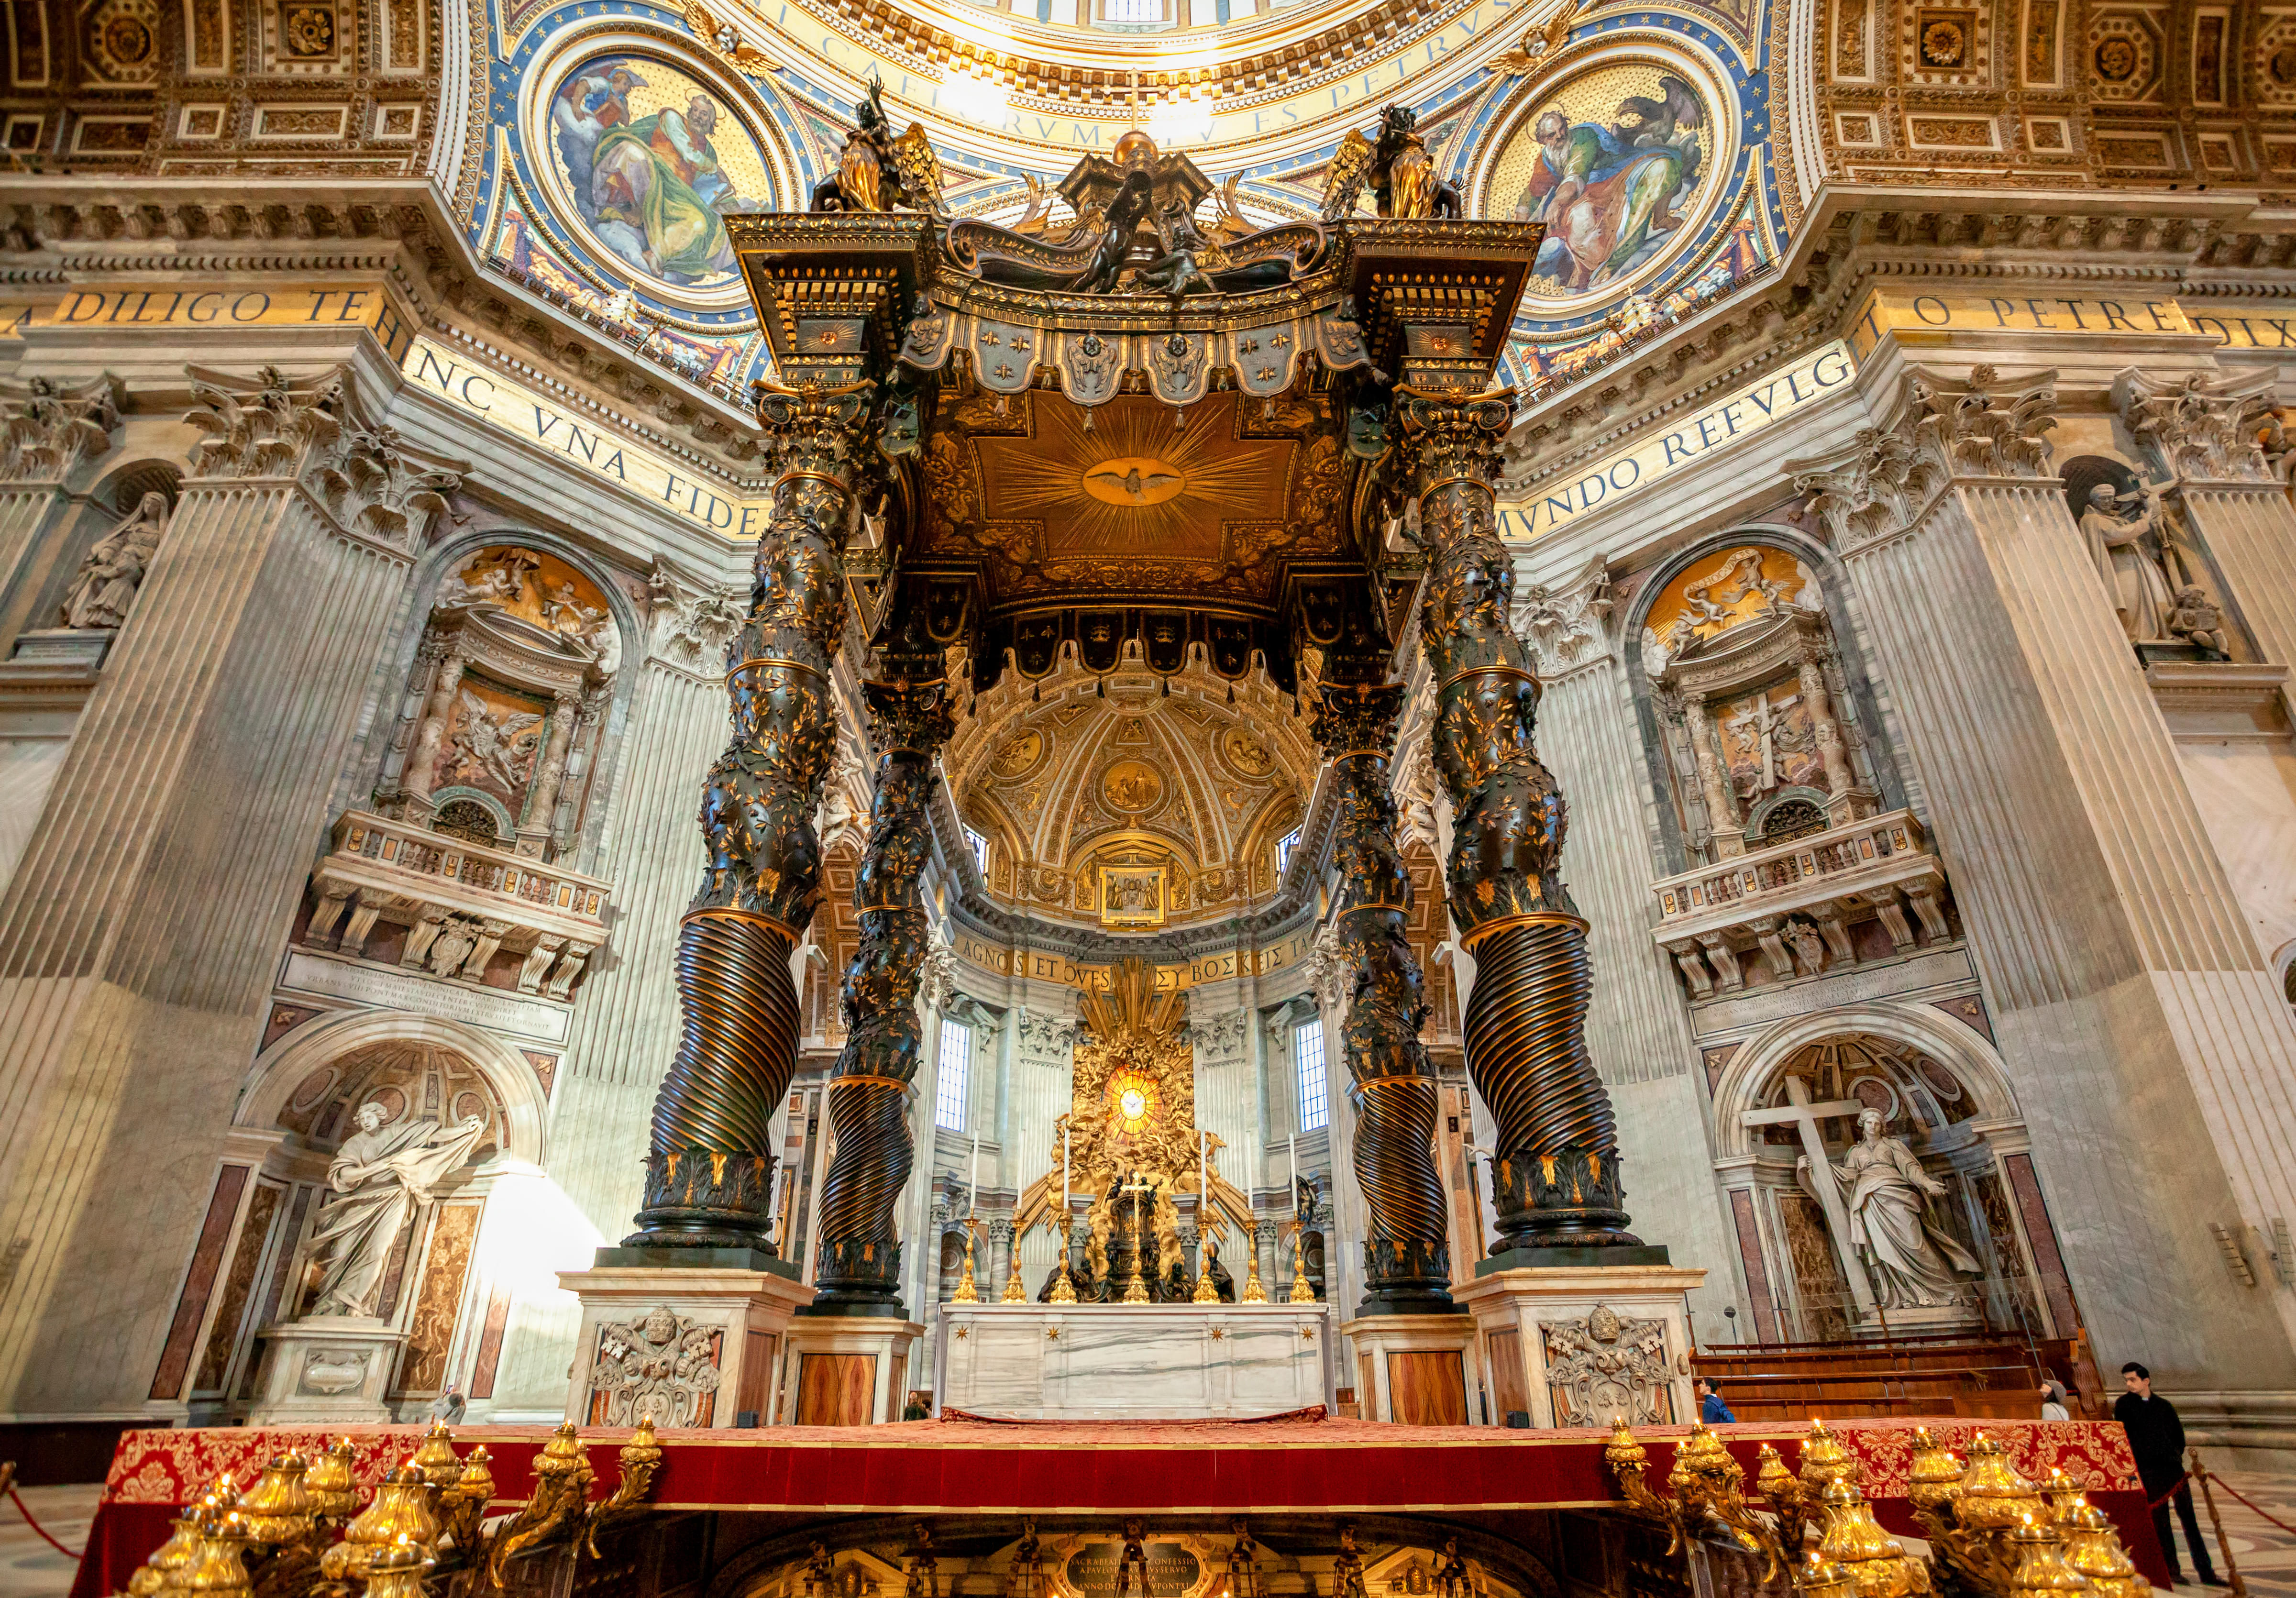 The Papal Altar